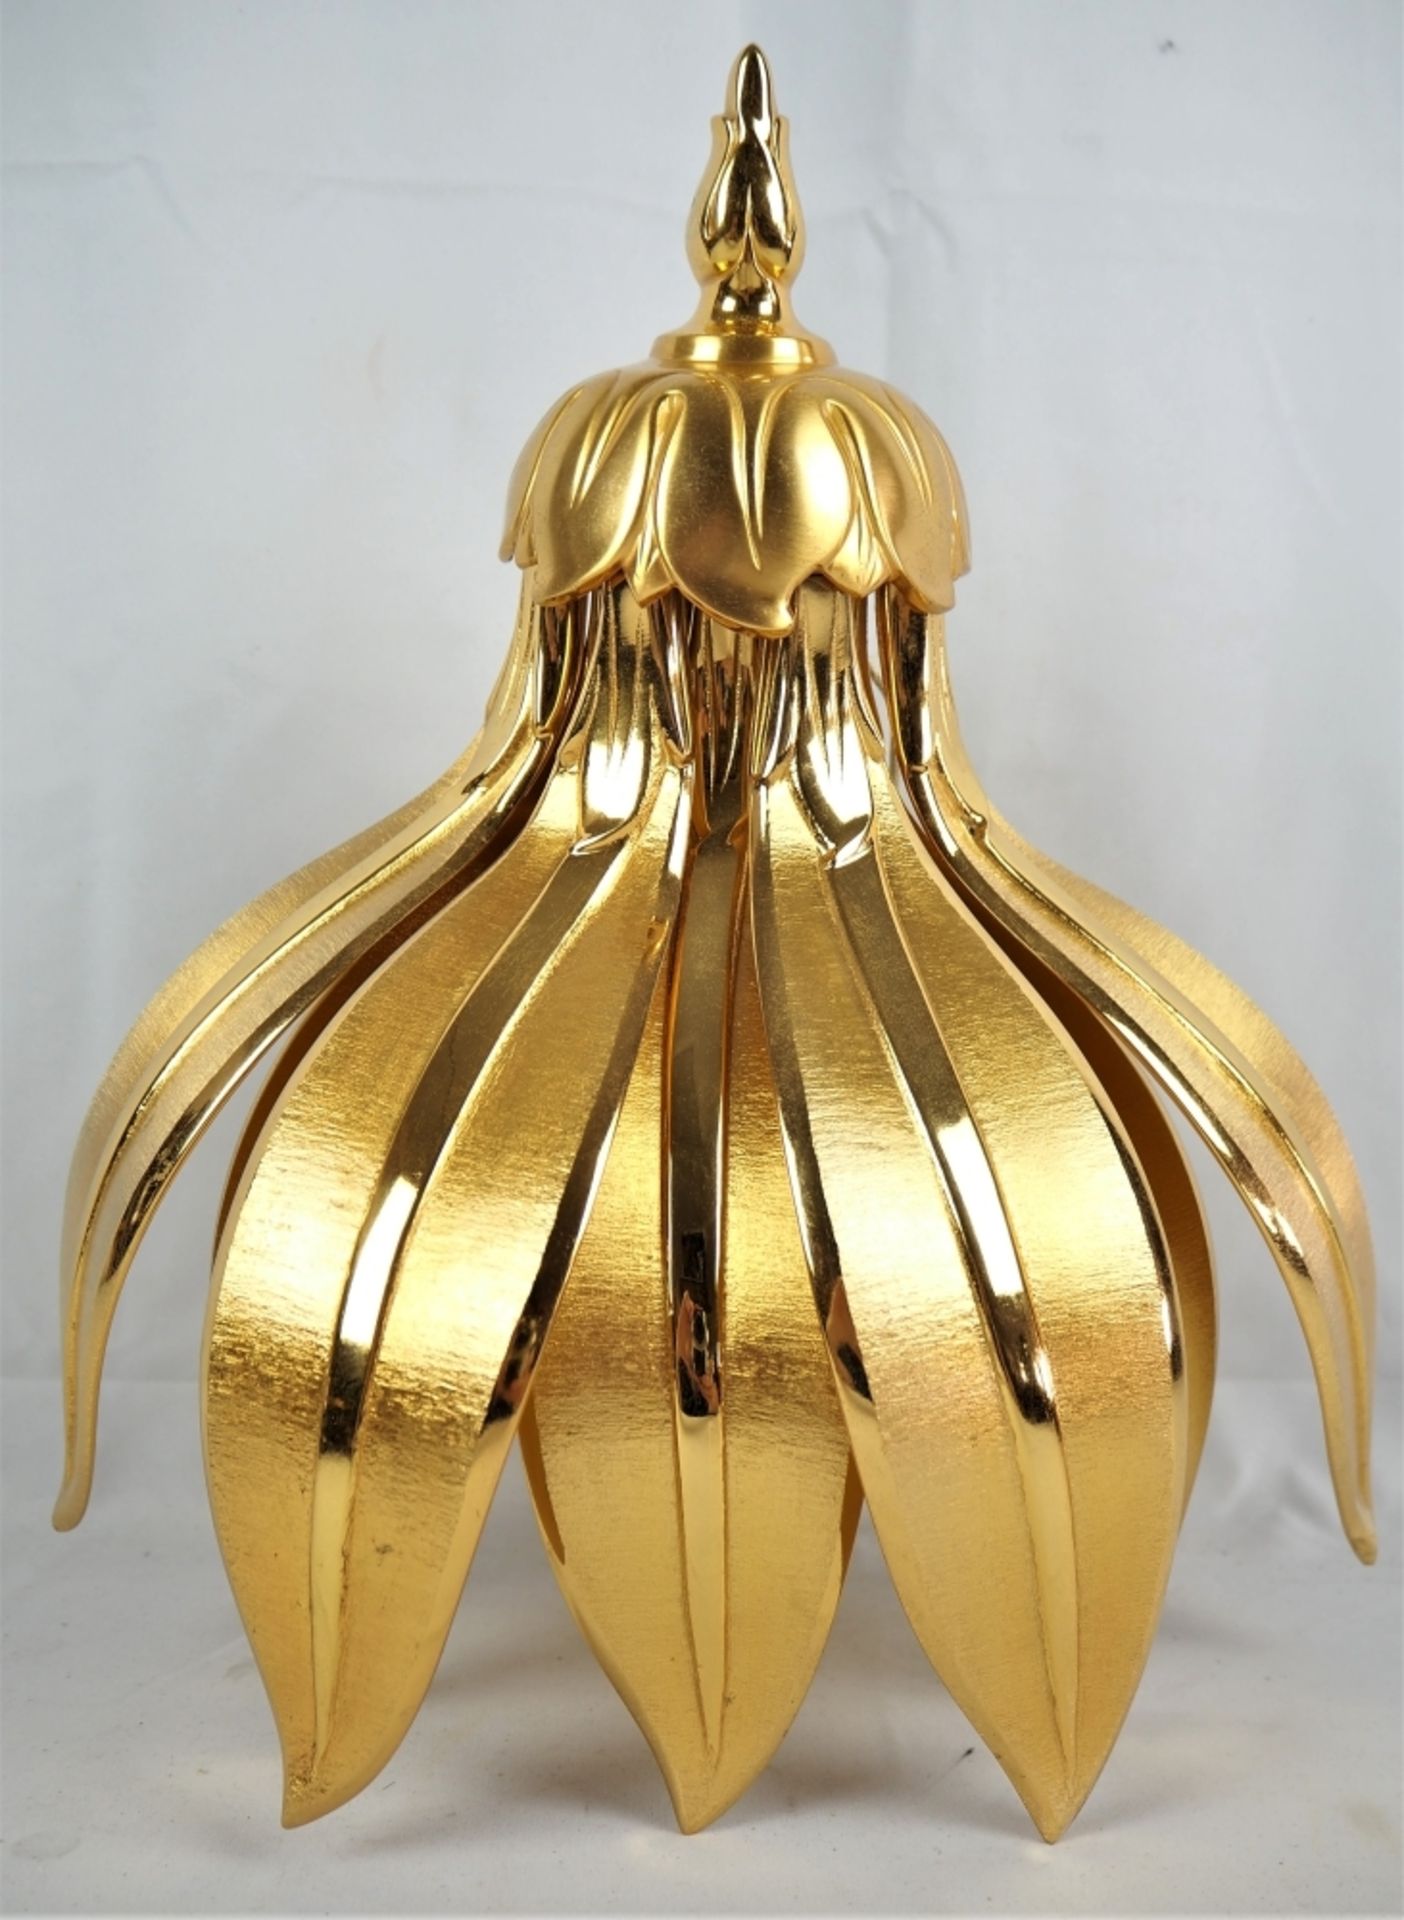 Designer Wandlampe, Marke "LUMI - Milano", 24k vergoldetmassives Messing, schwere Ausfüh - Bild 2 aus 5